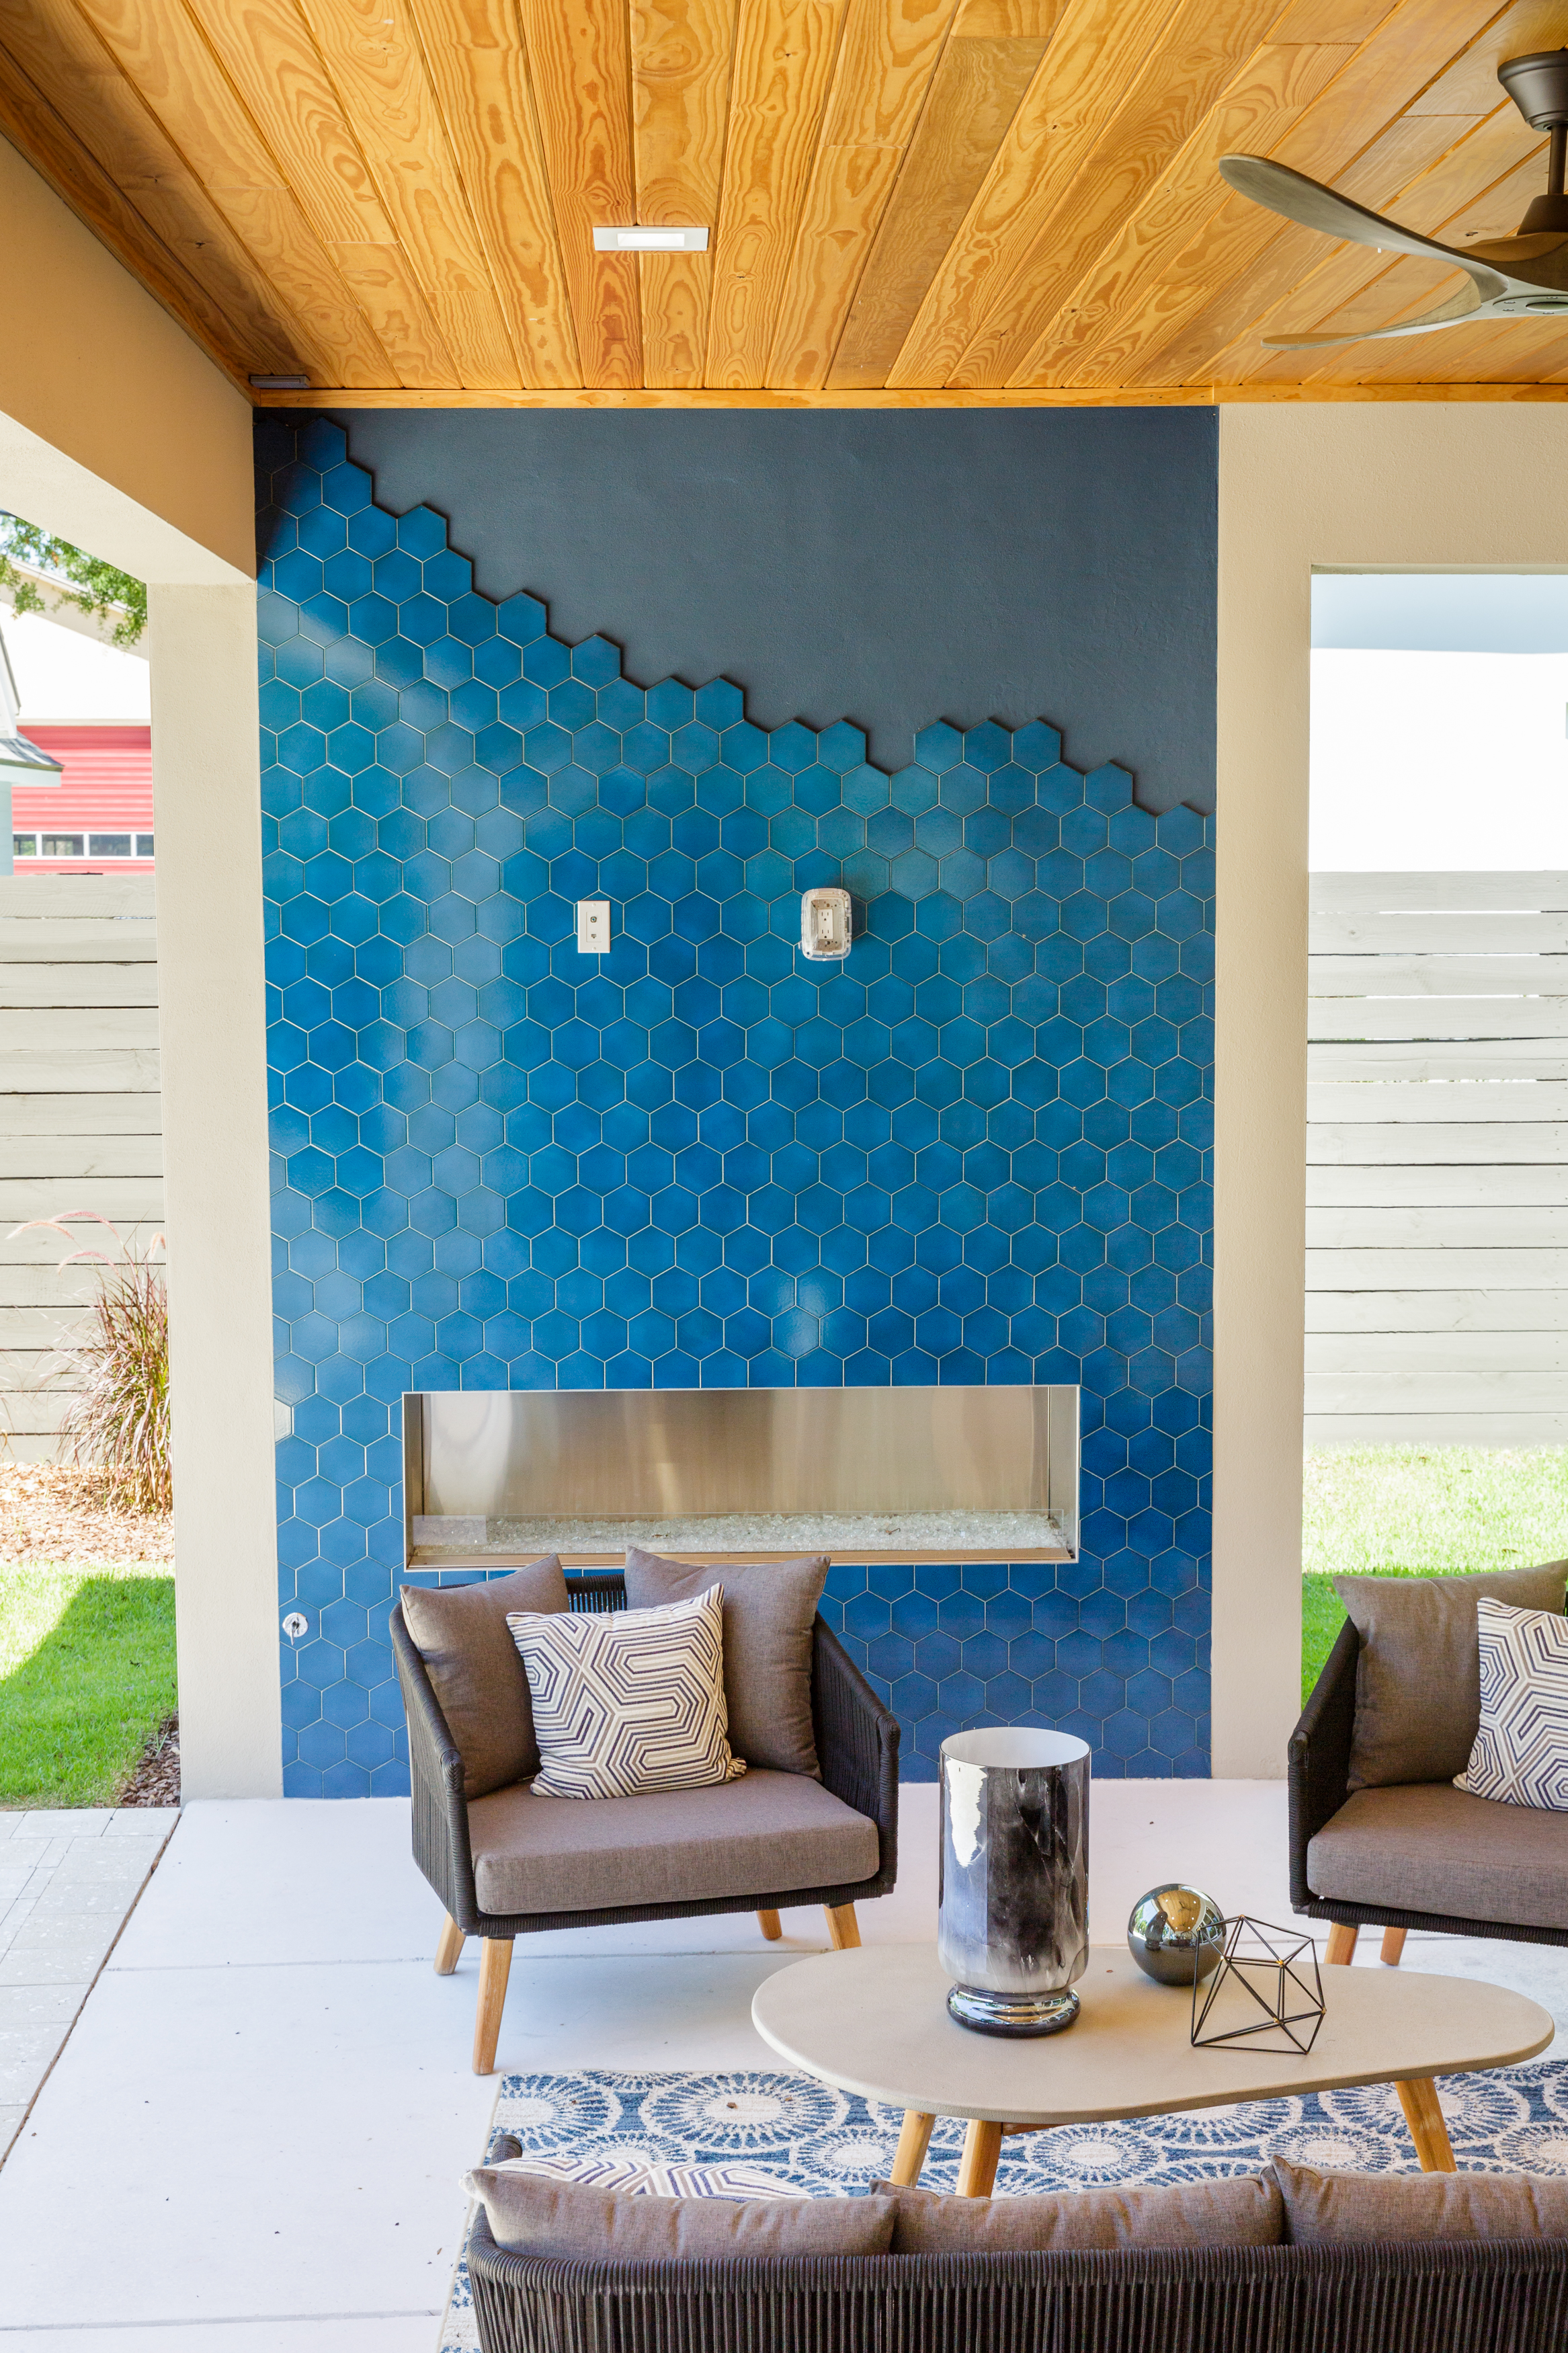 Grinnell Modern: Outdoor Fireplace